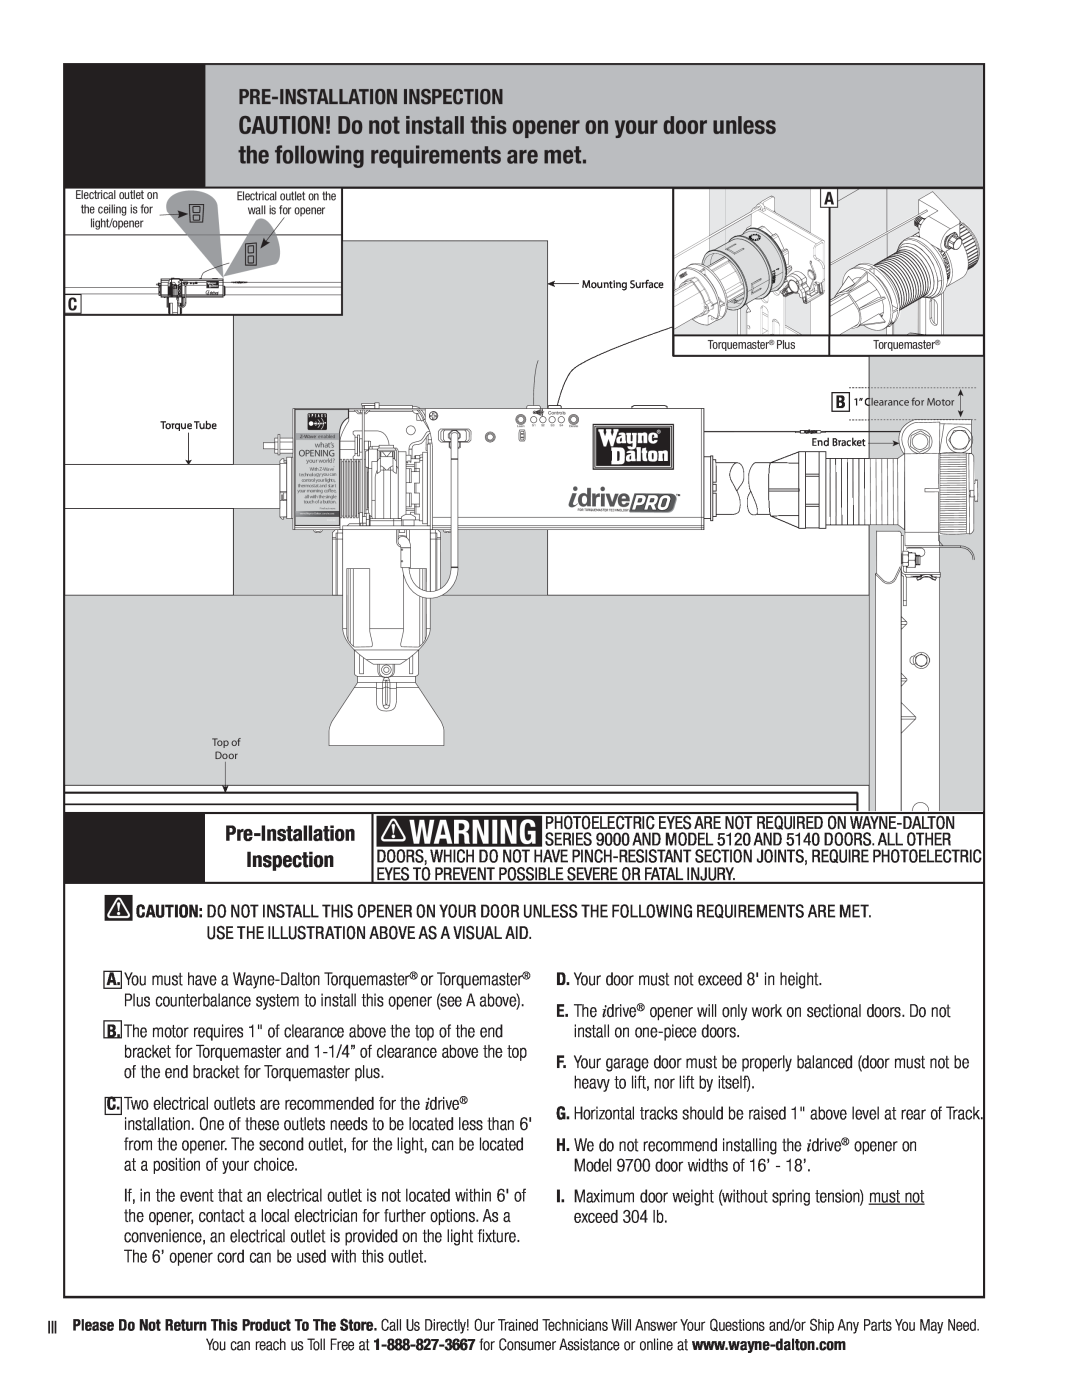 Wayne-Dalton 3790-Z installation instructions Pre-Installationinspection, Inspection 